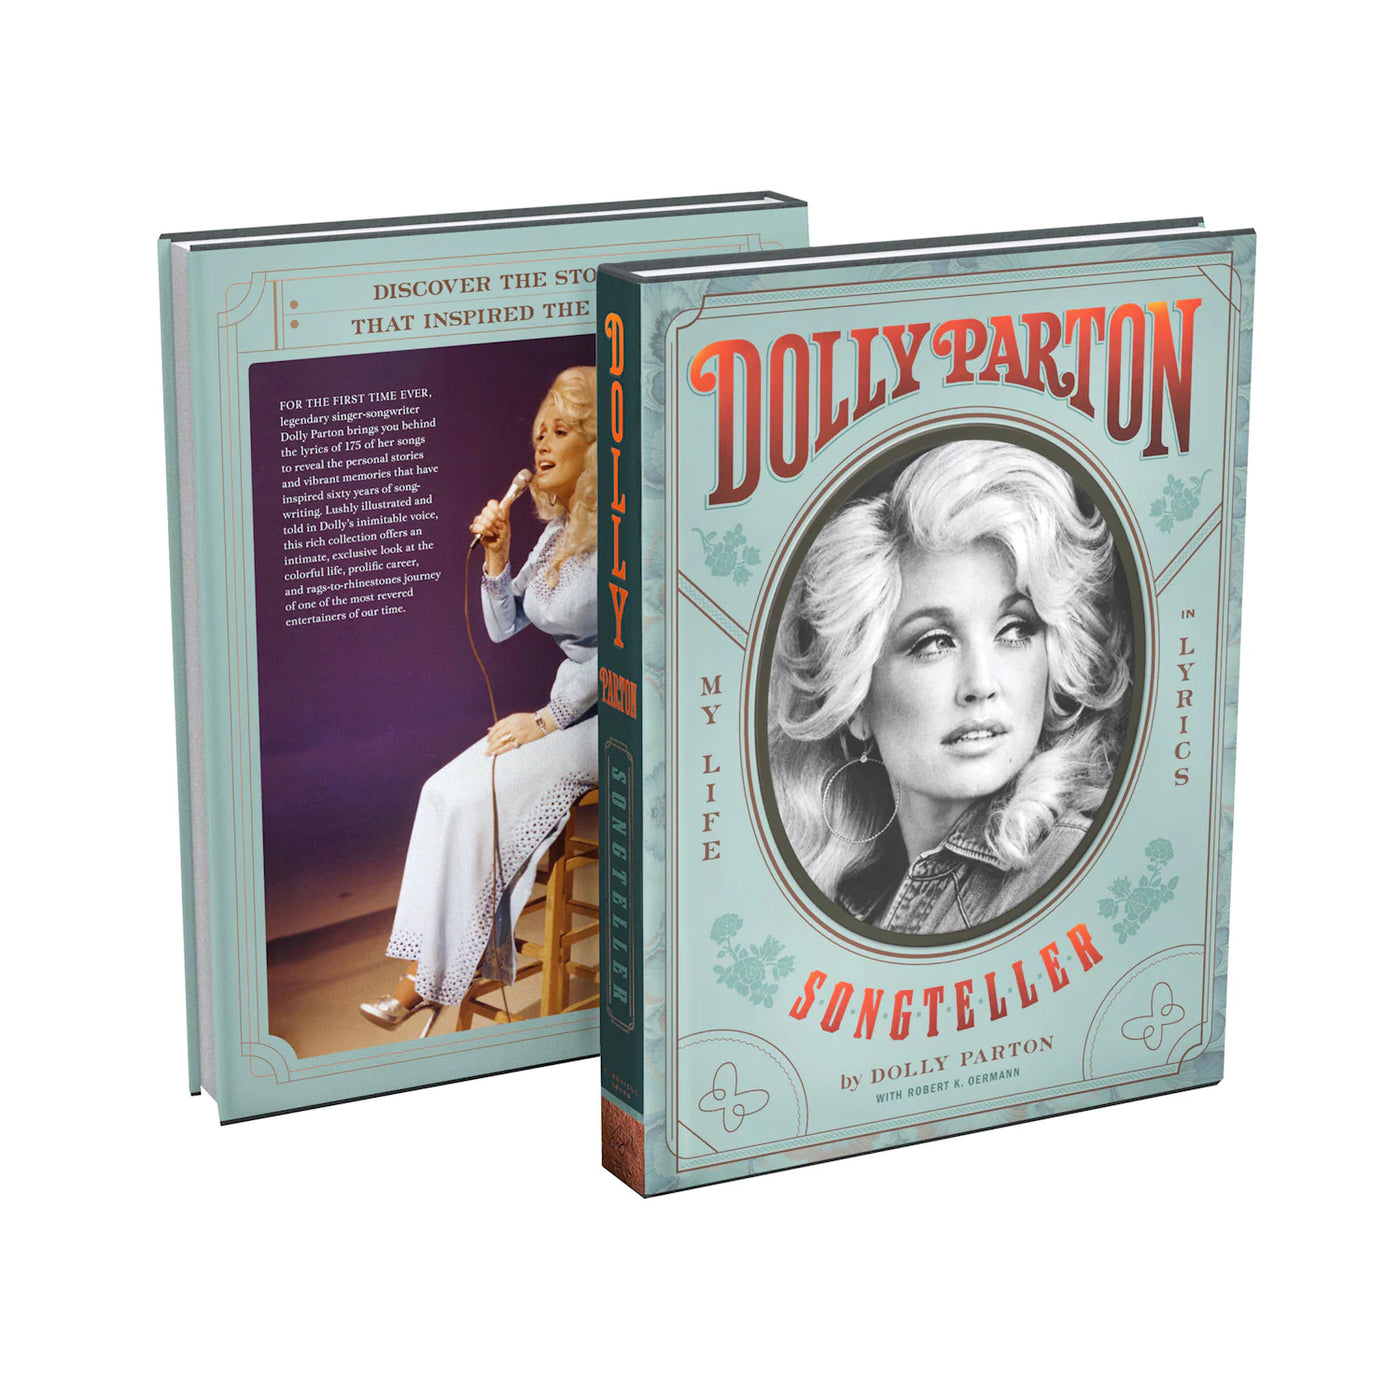 Dolly Parton: Songteller Book My Life in Lyrics